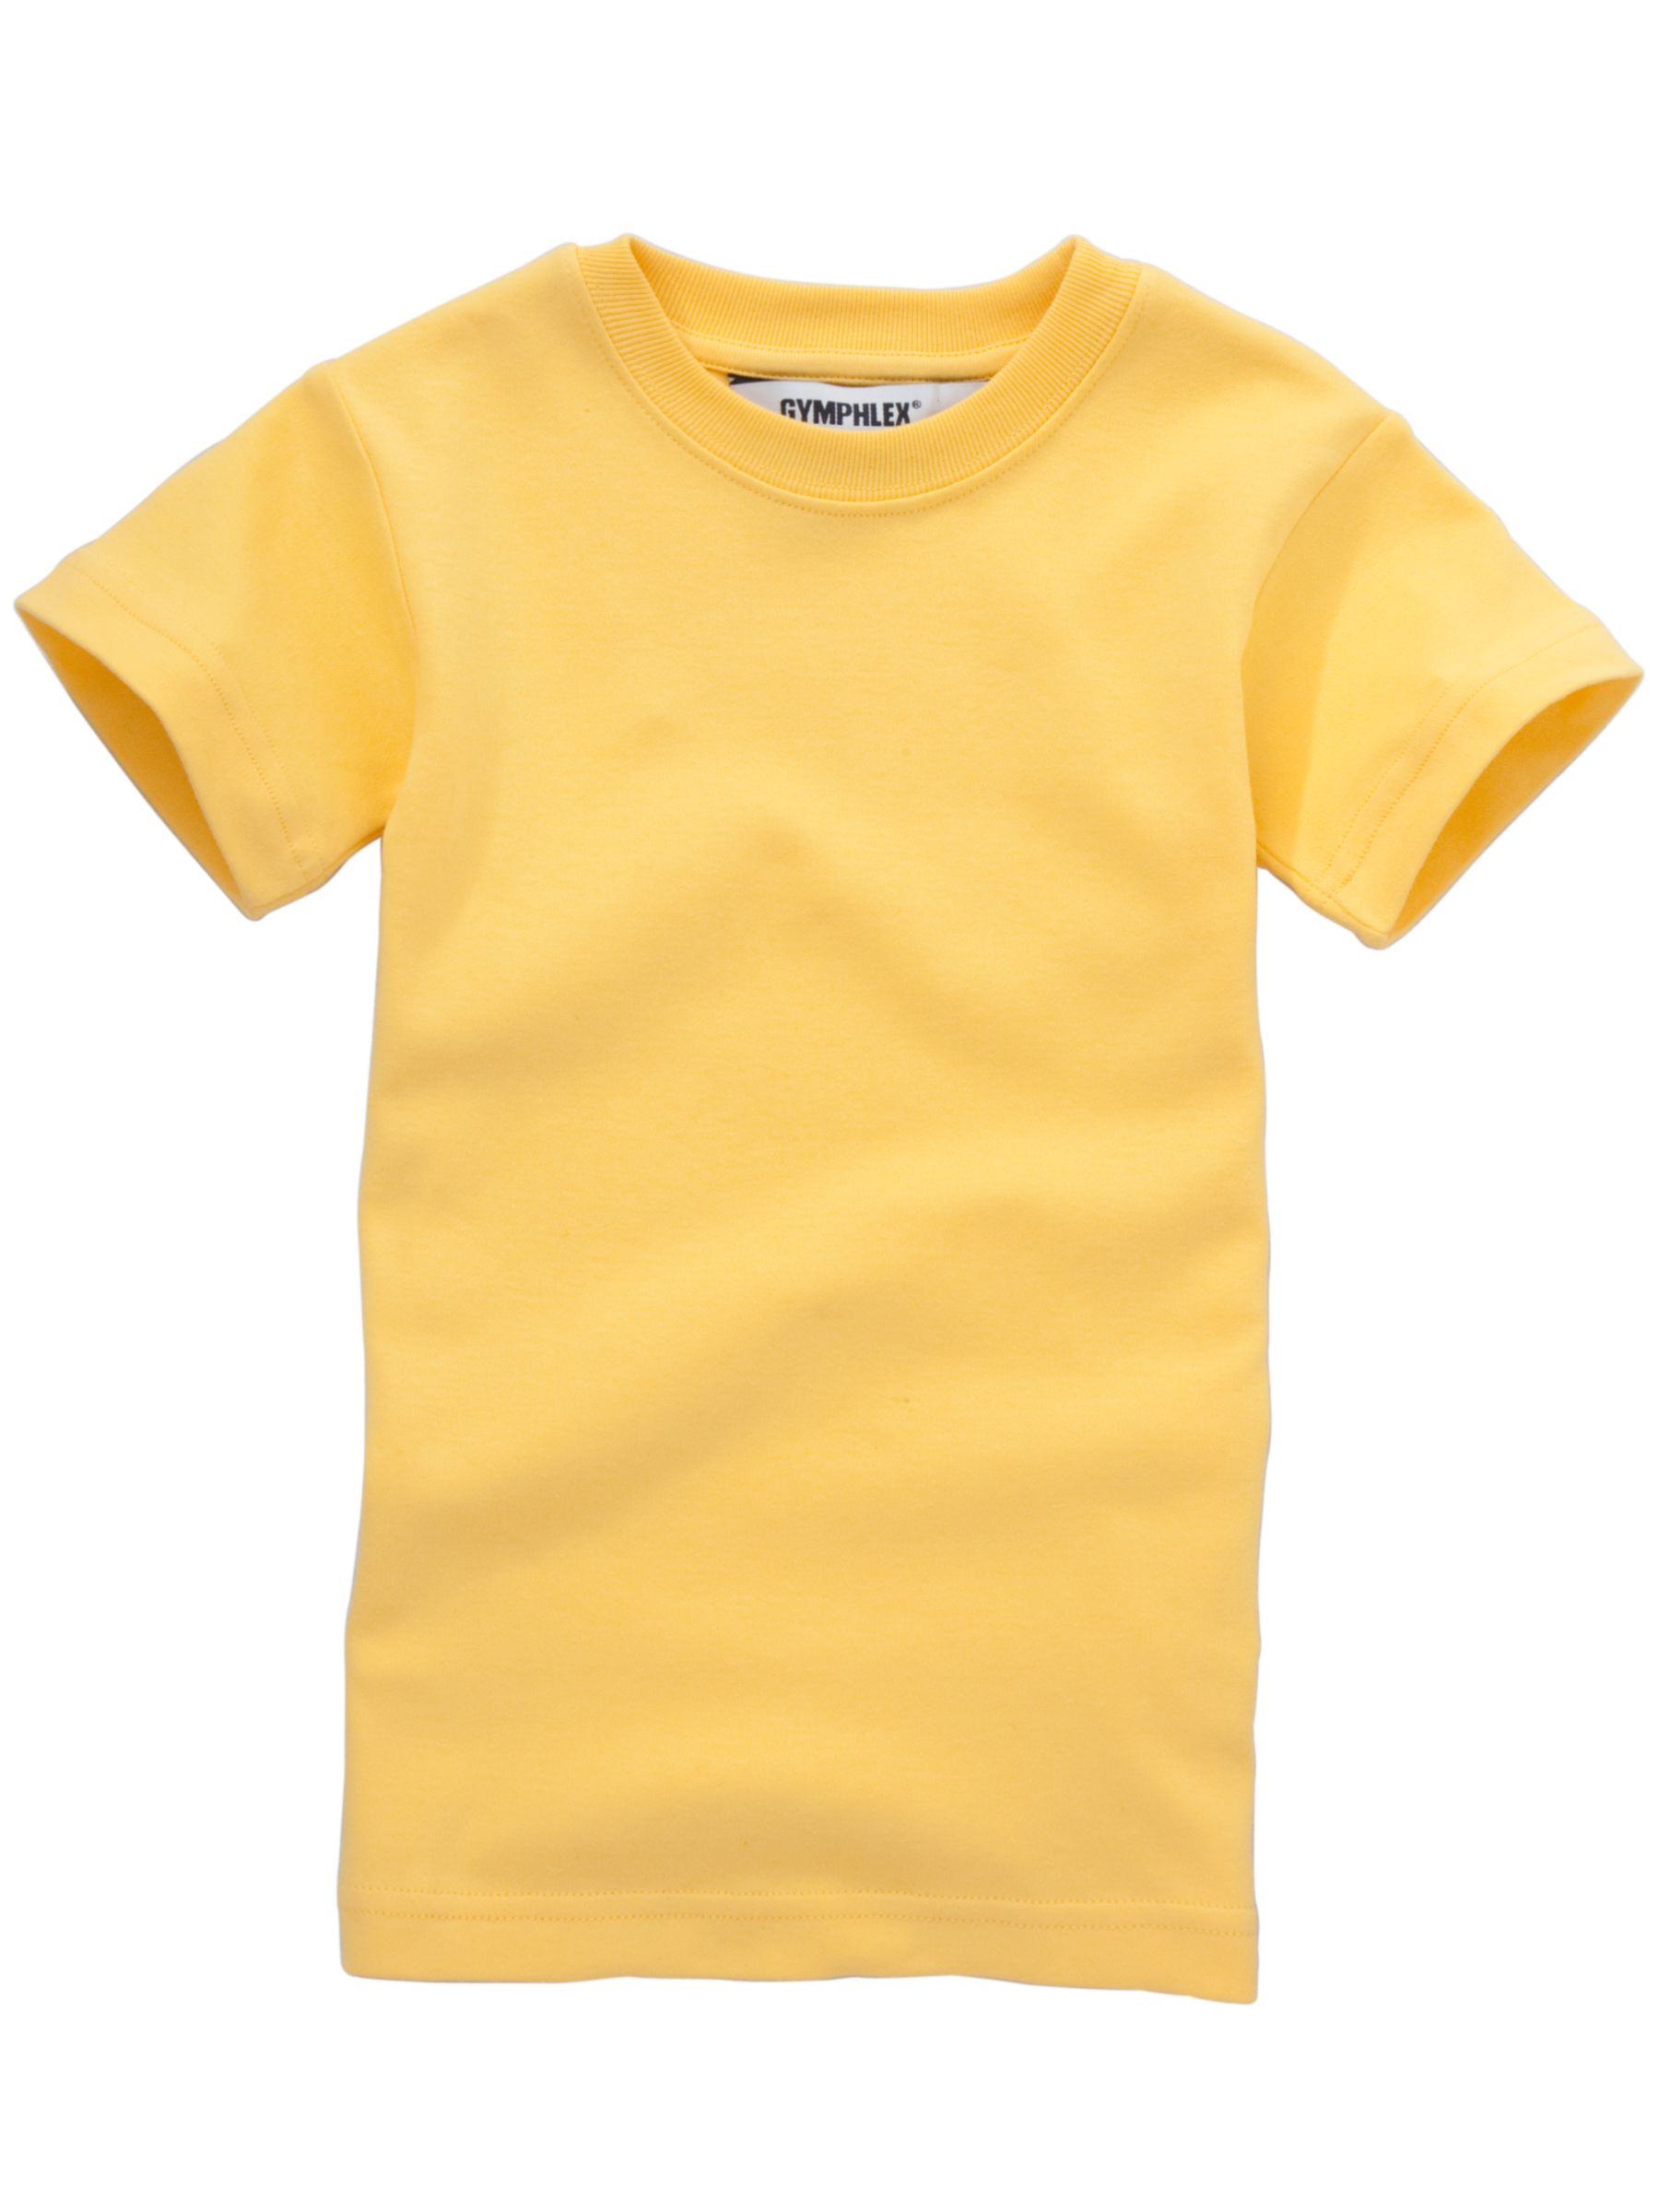 School Unisex Sports T-Shirt, Yellow